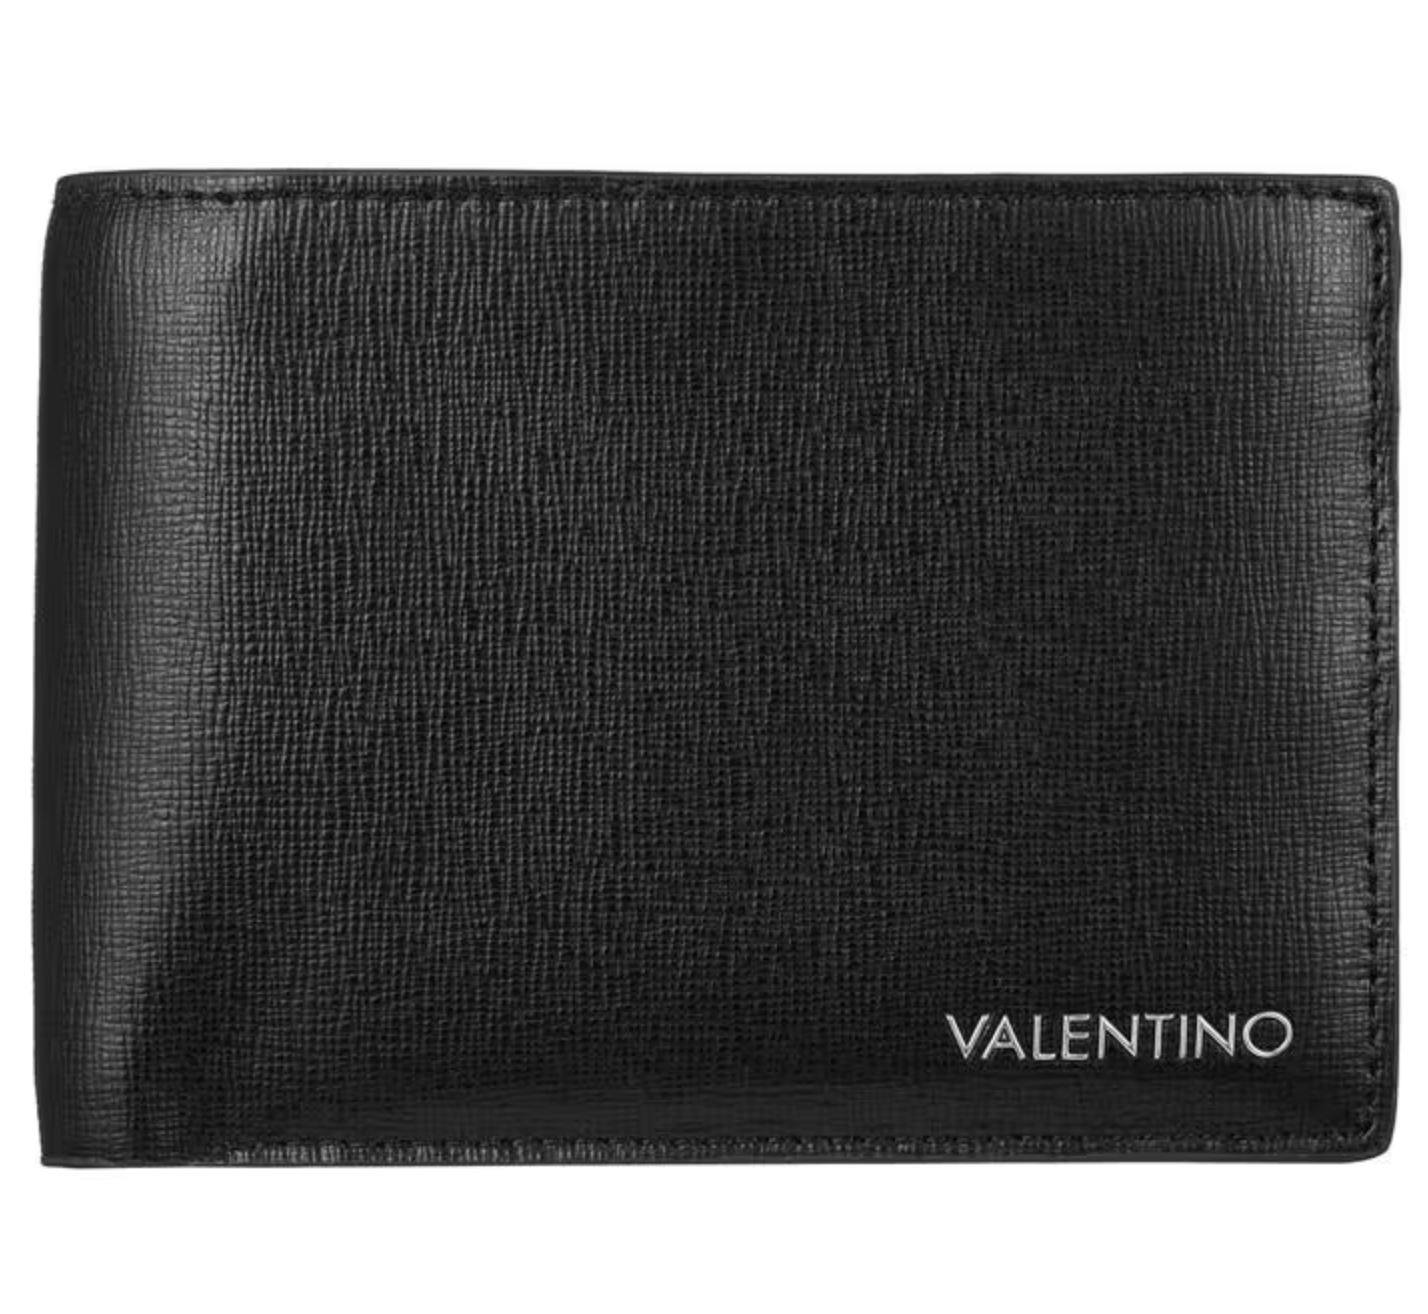 Valentino "MARINER" Grained Wallet Black